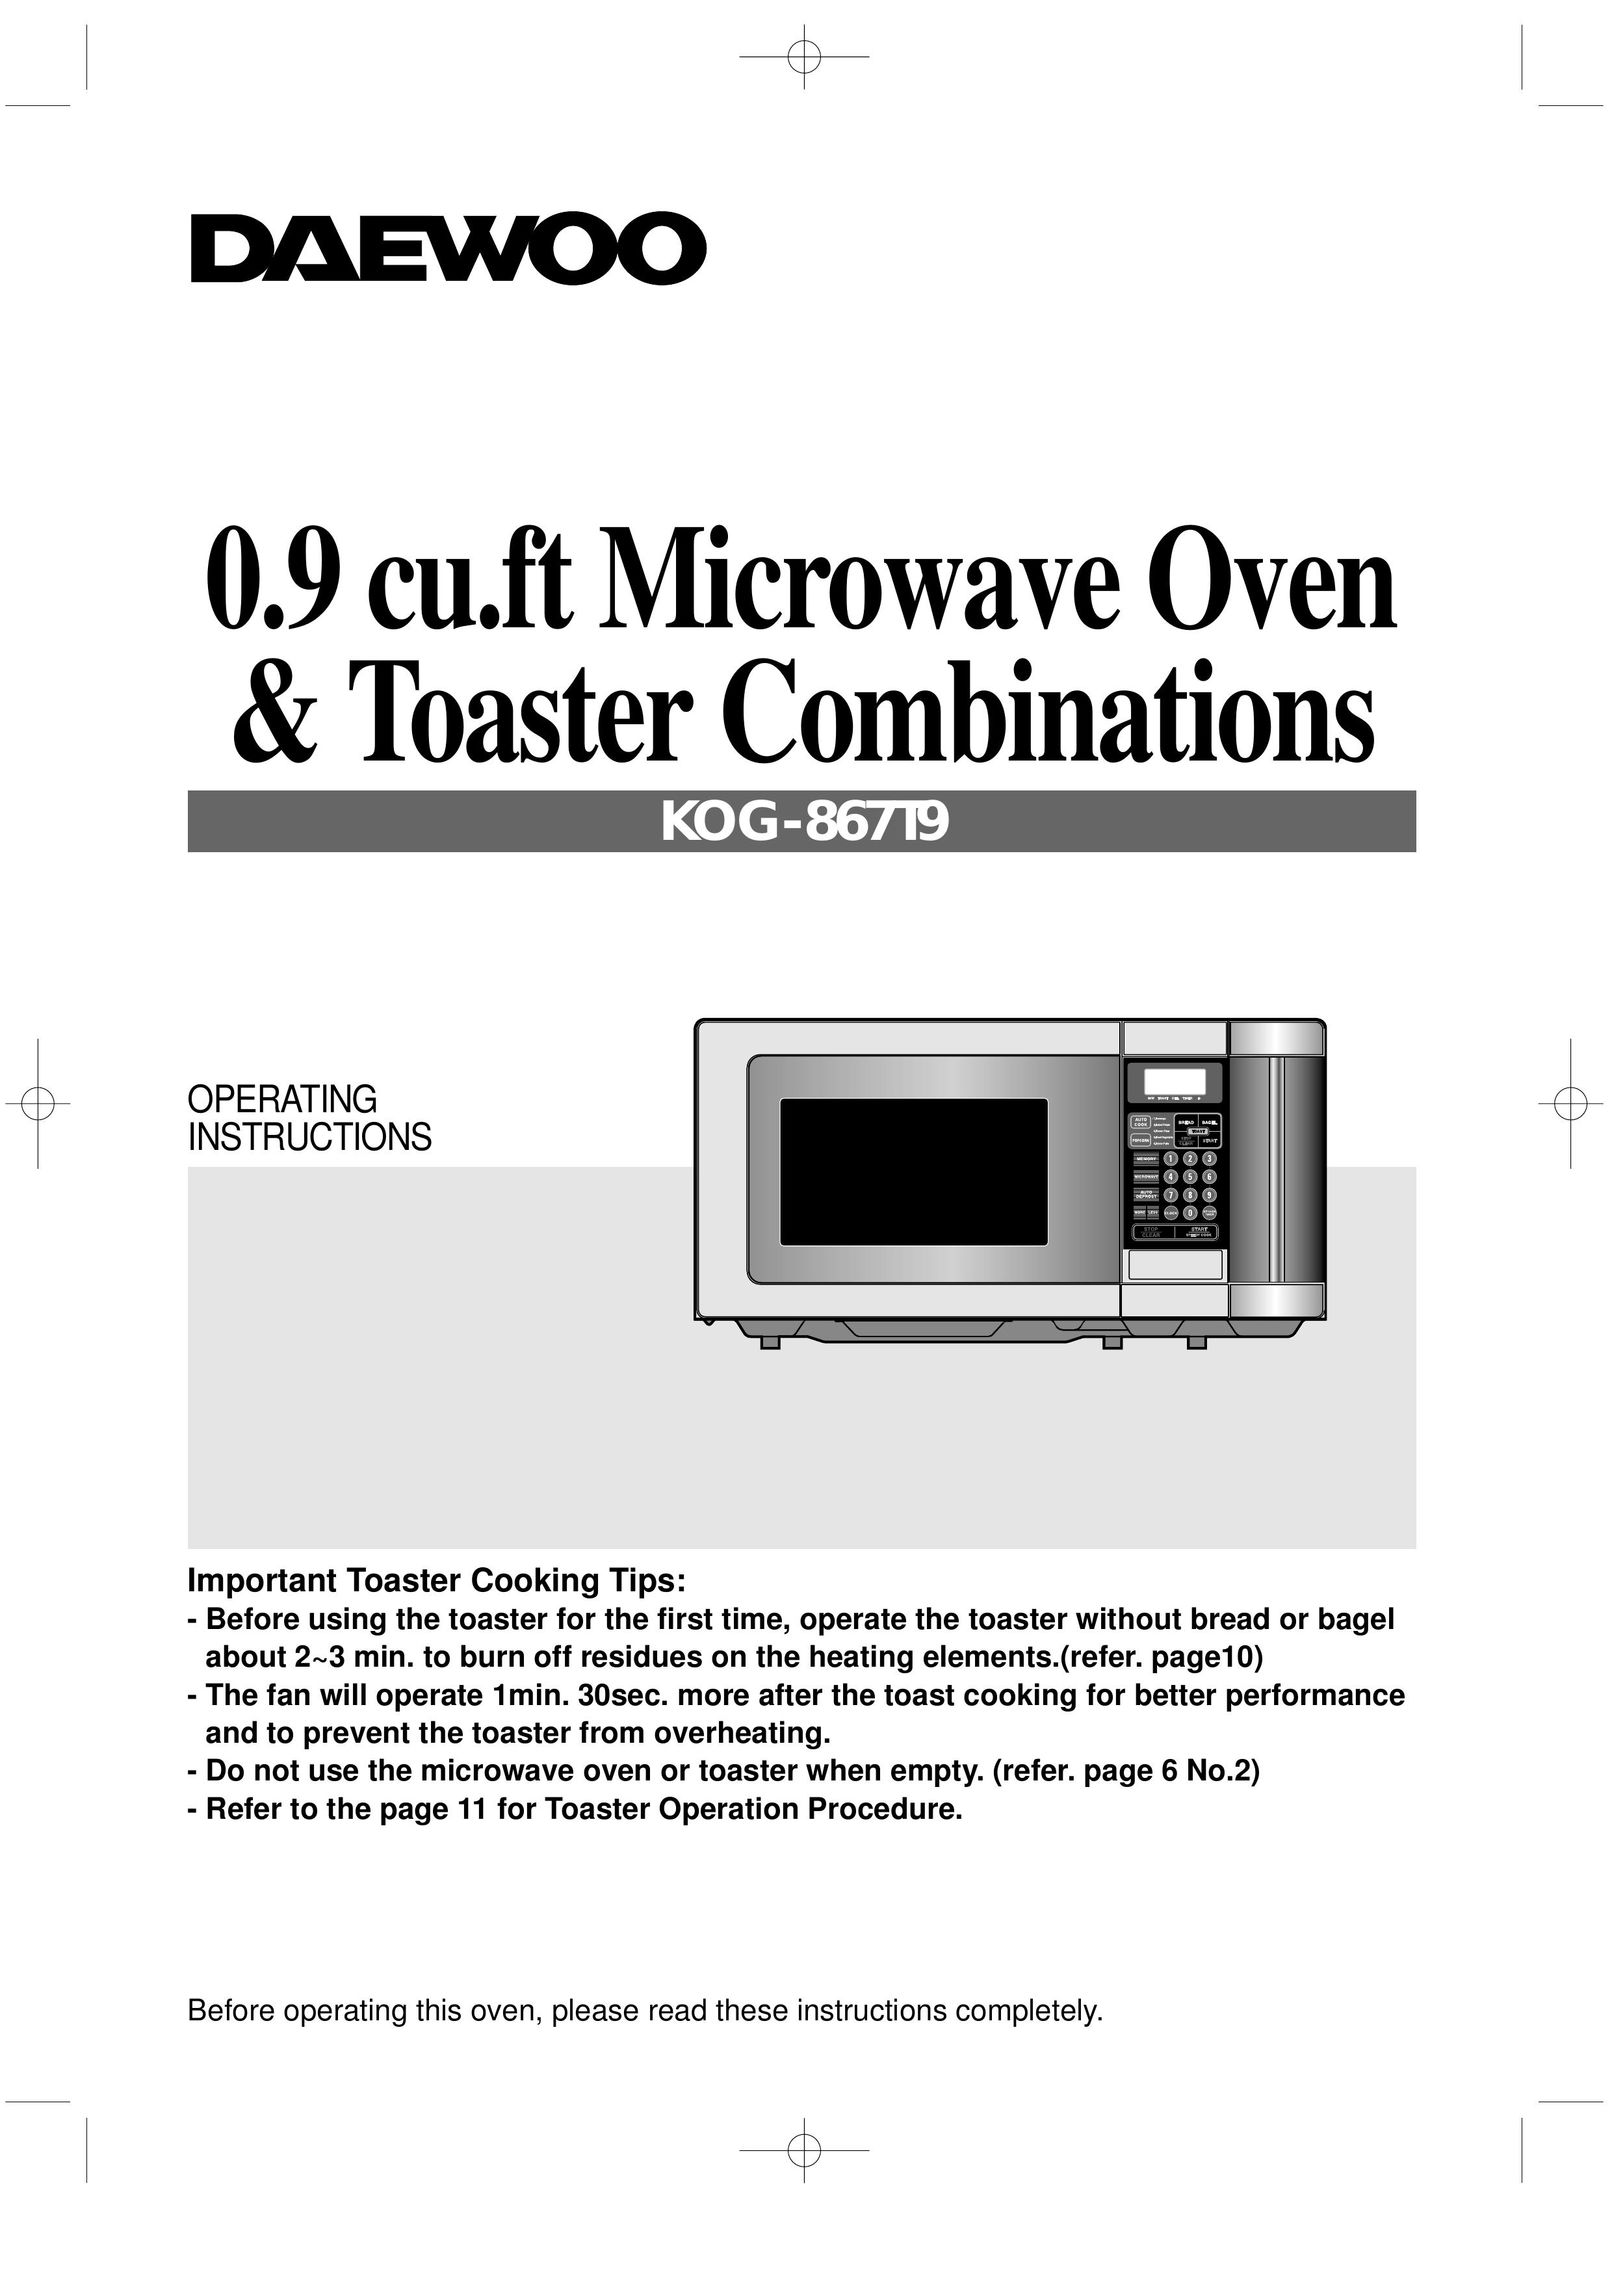 Daewoo KOG-867T9 Microwave Oven User Manual